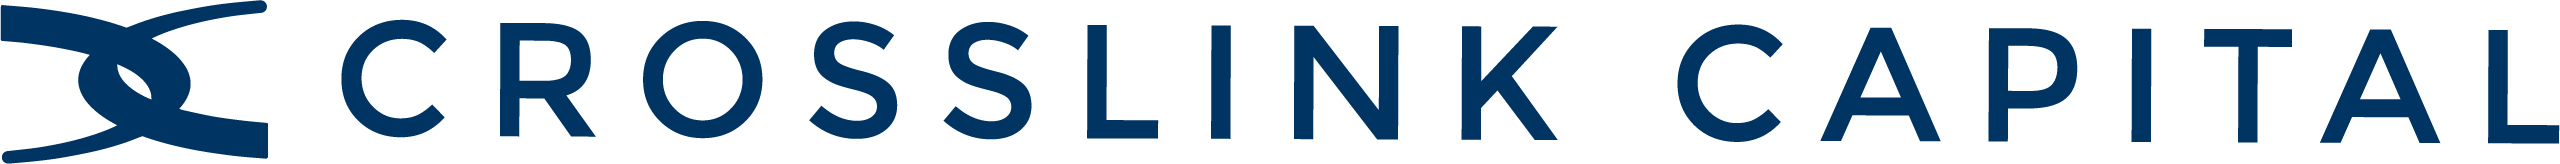 crosslink capital logo